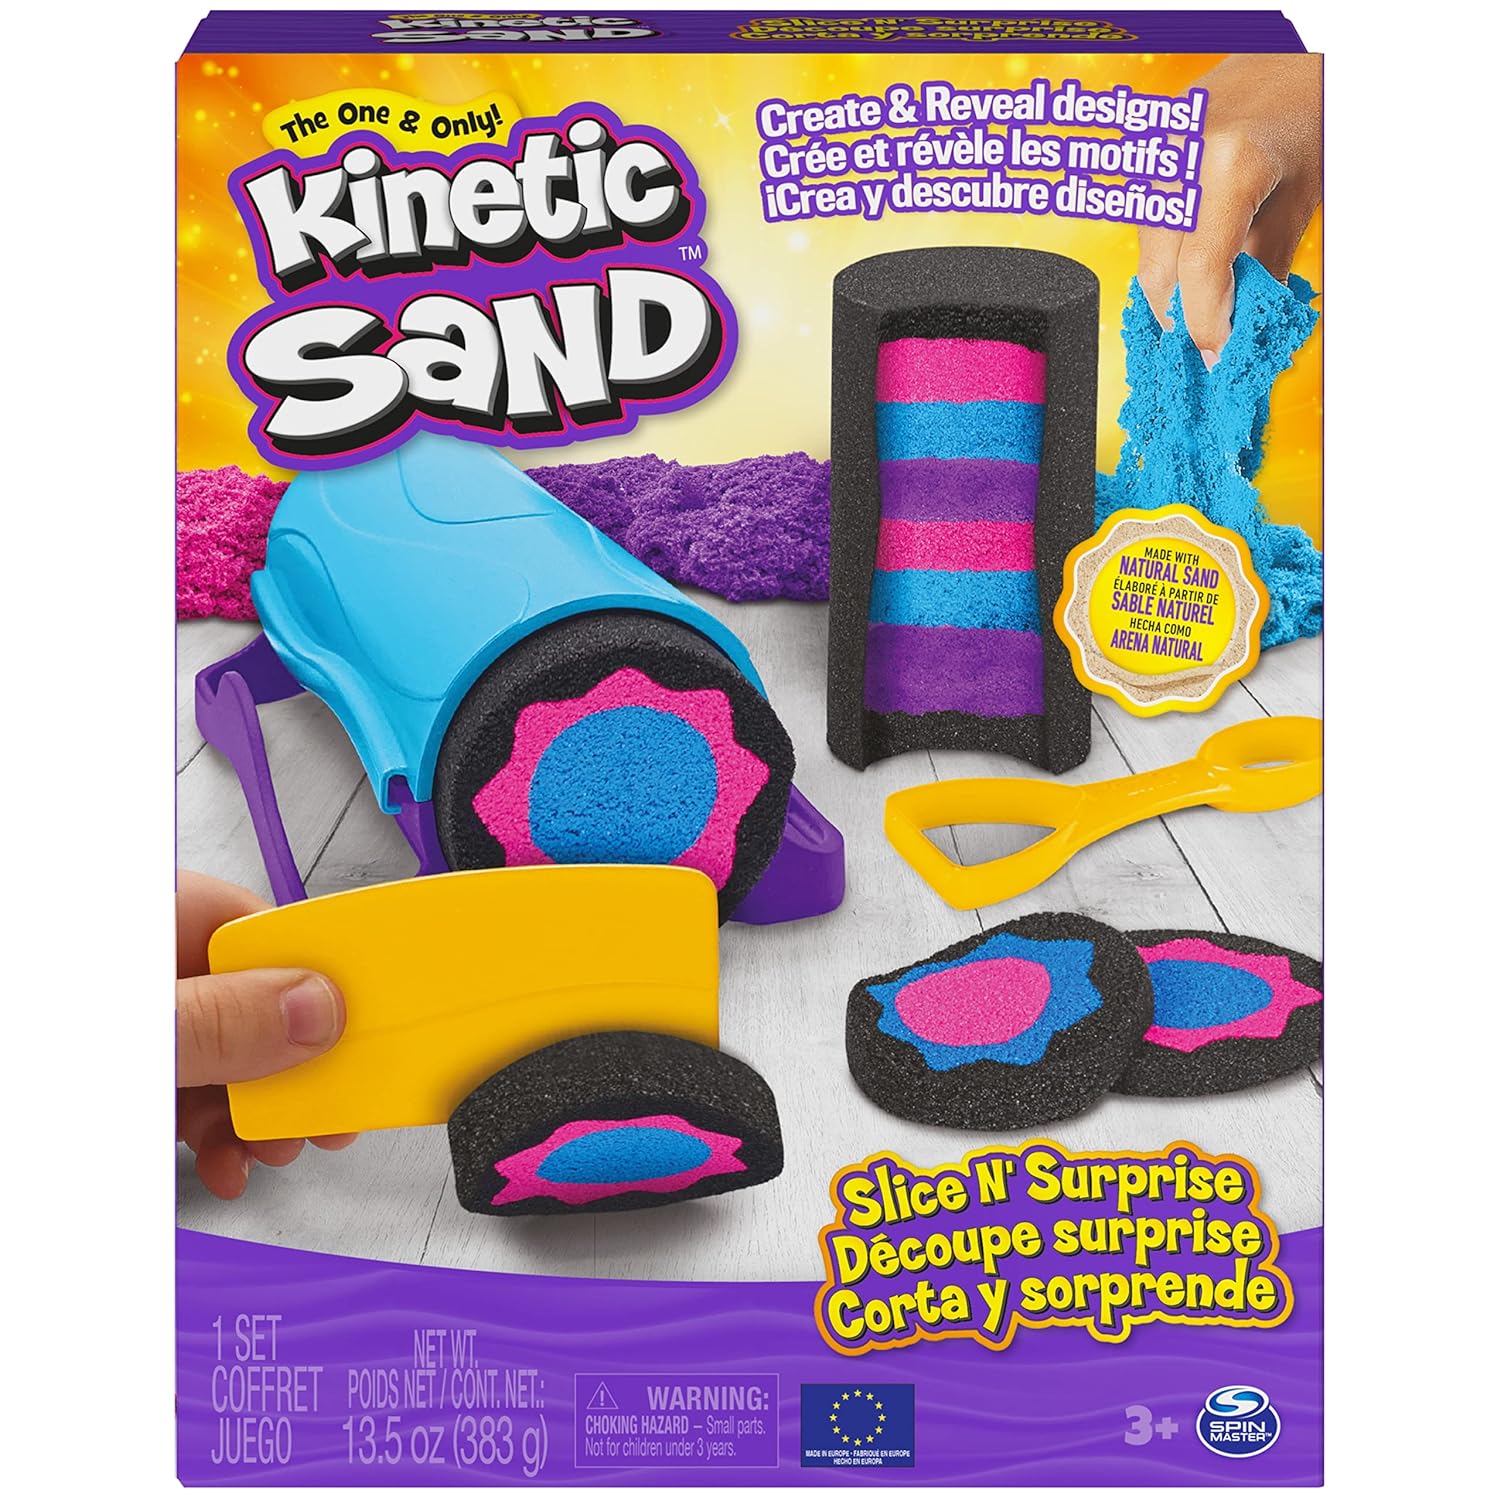 Kinetic Sand Slice N' Surprise Set